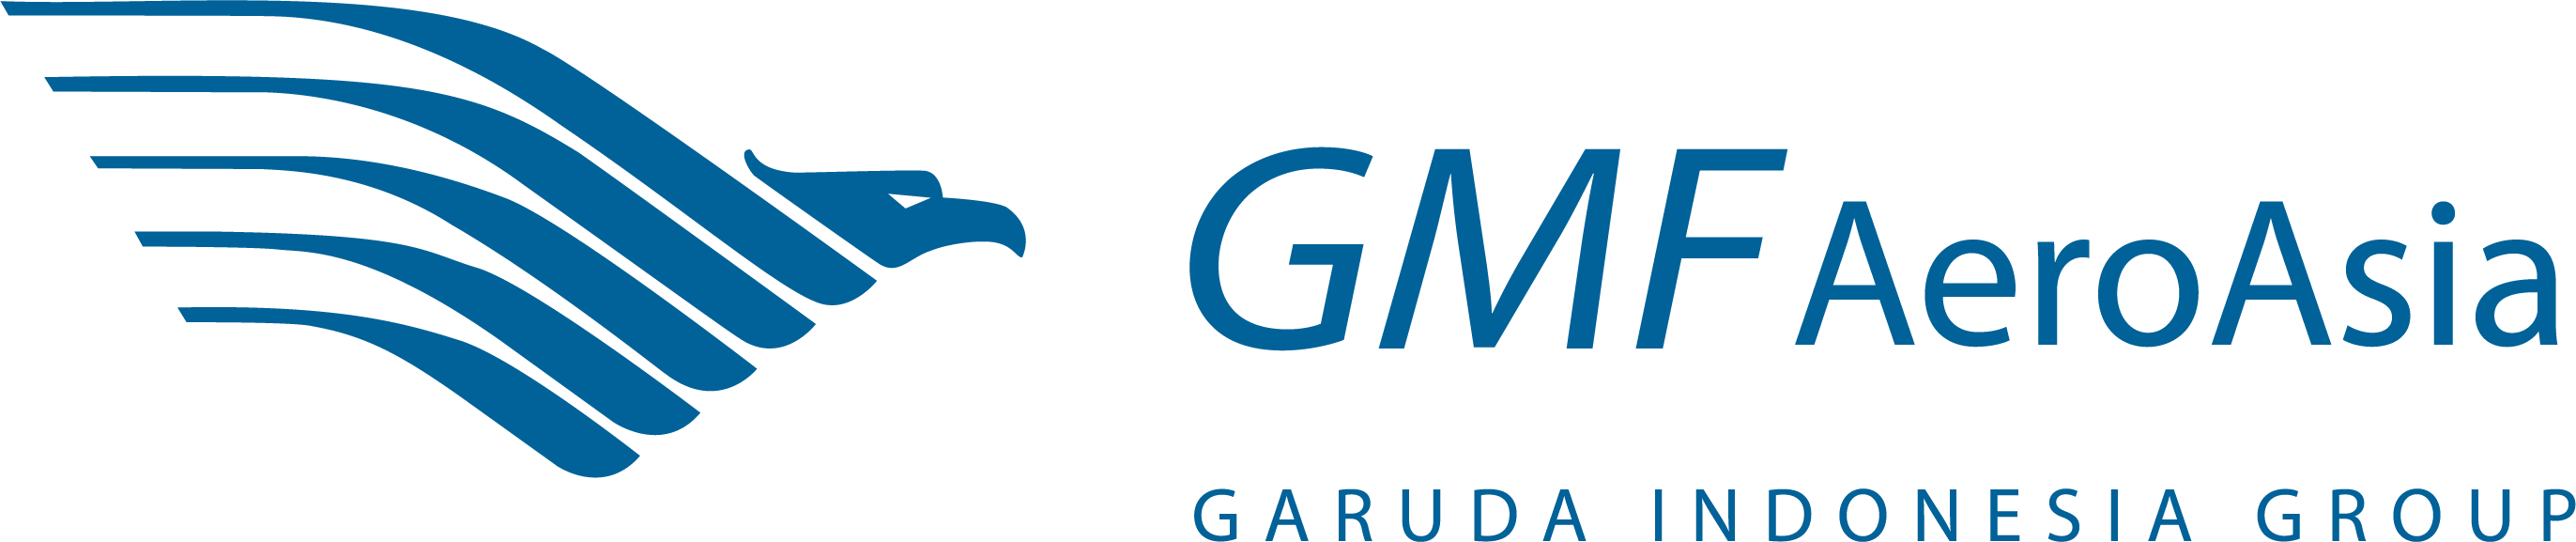 GMF AeroAsia Logo New Blue.png